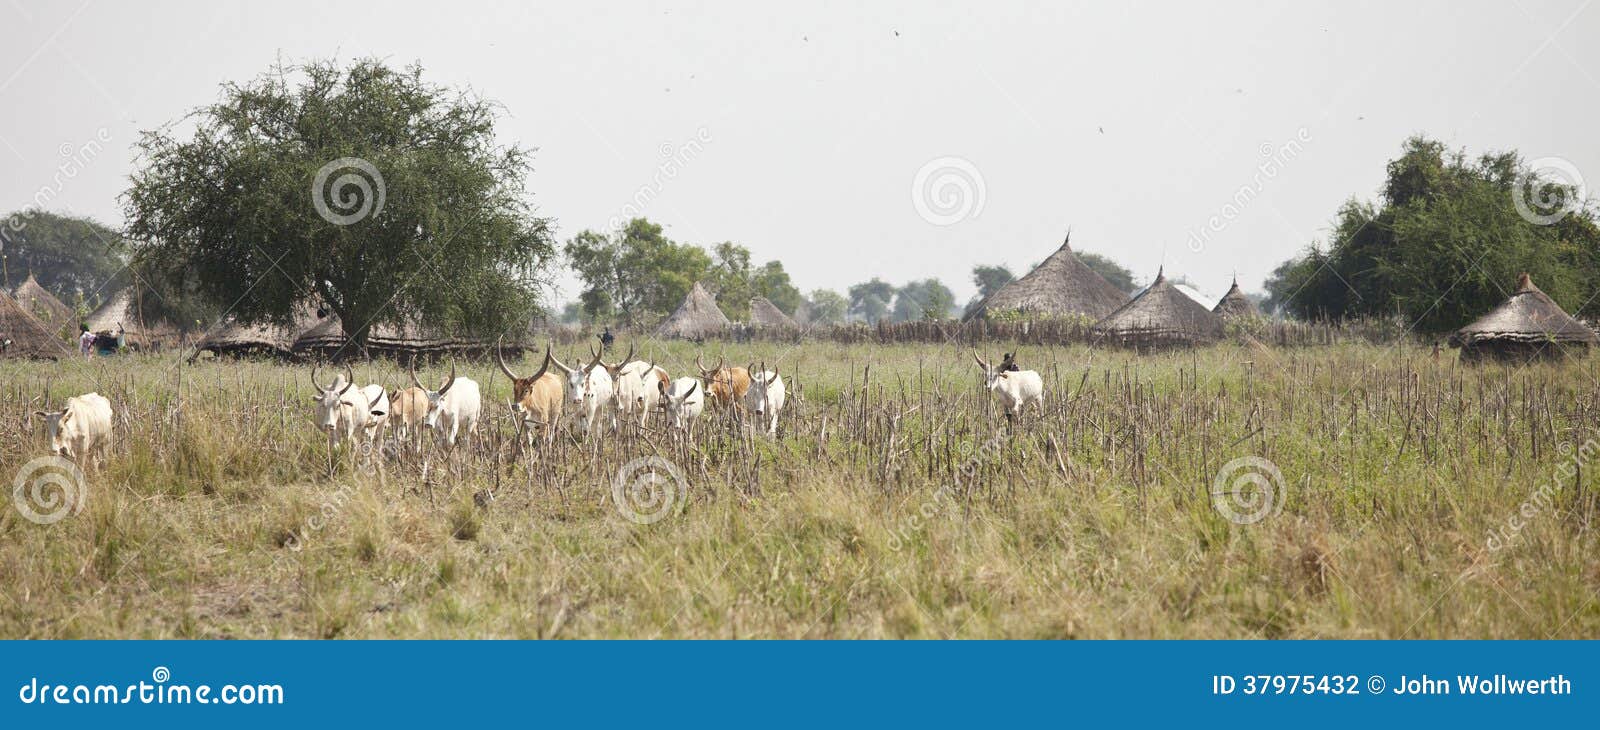 cattle in african village